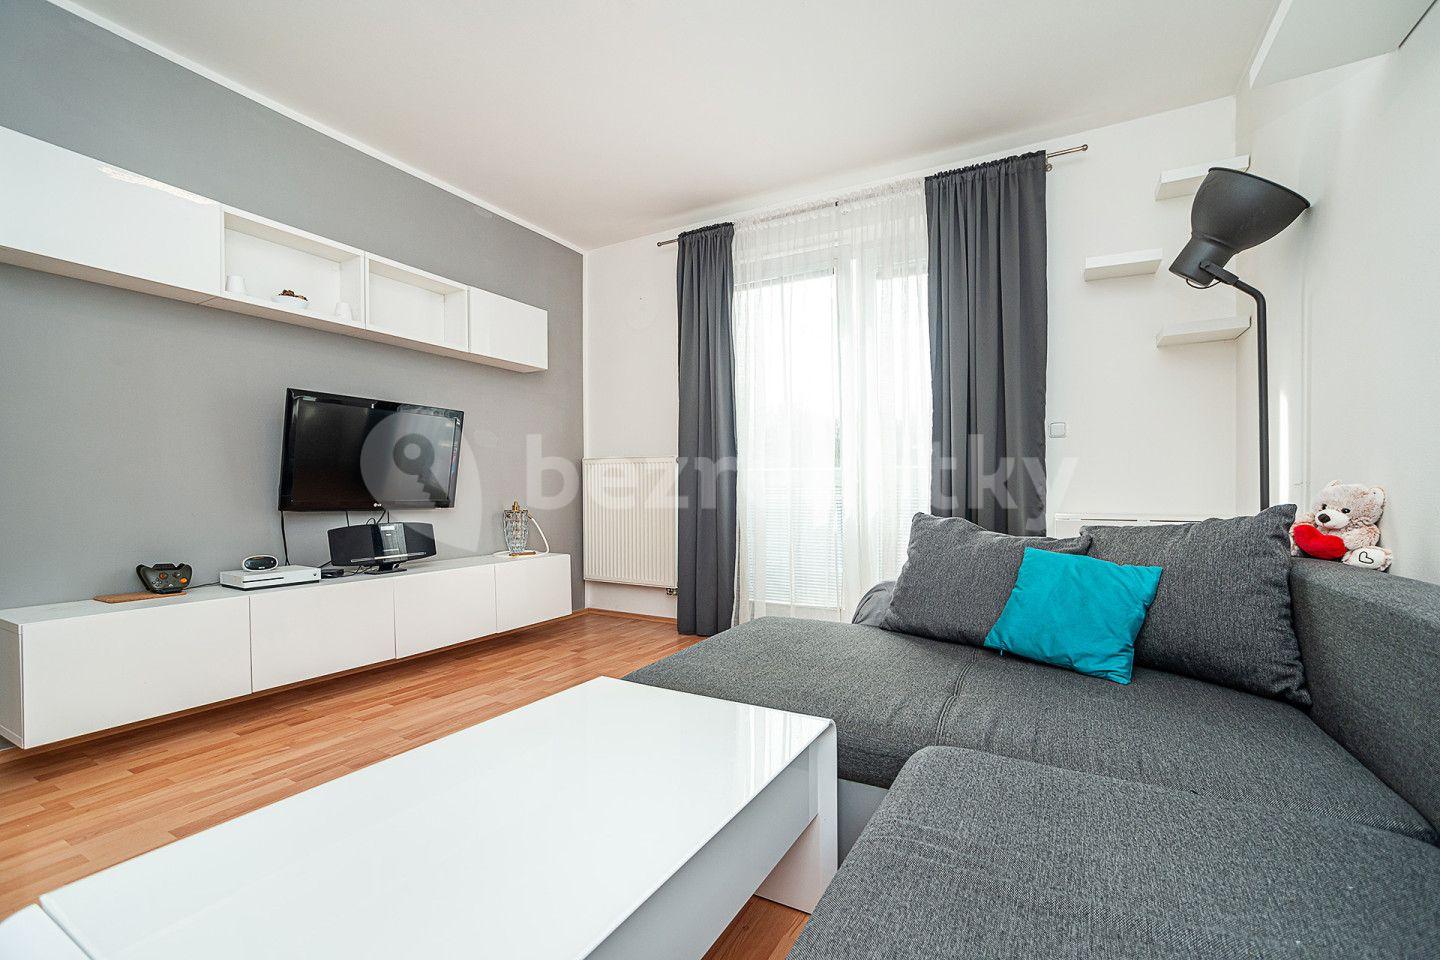 2 bedroom flat for sale, 49 m², Ježovská, Prague, Prague